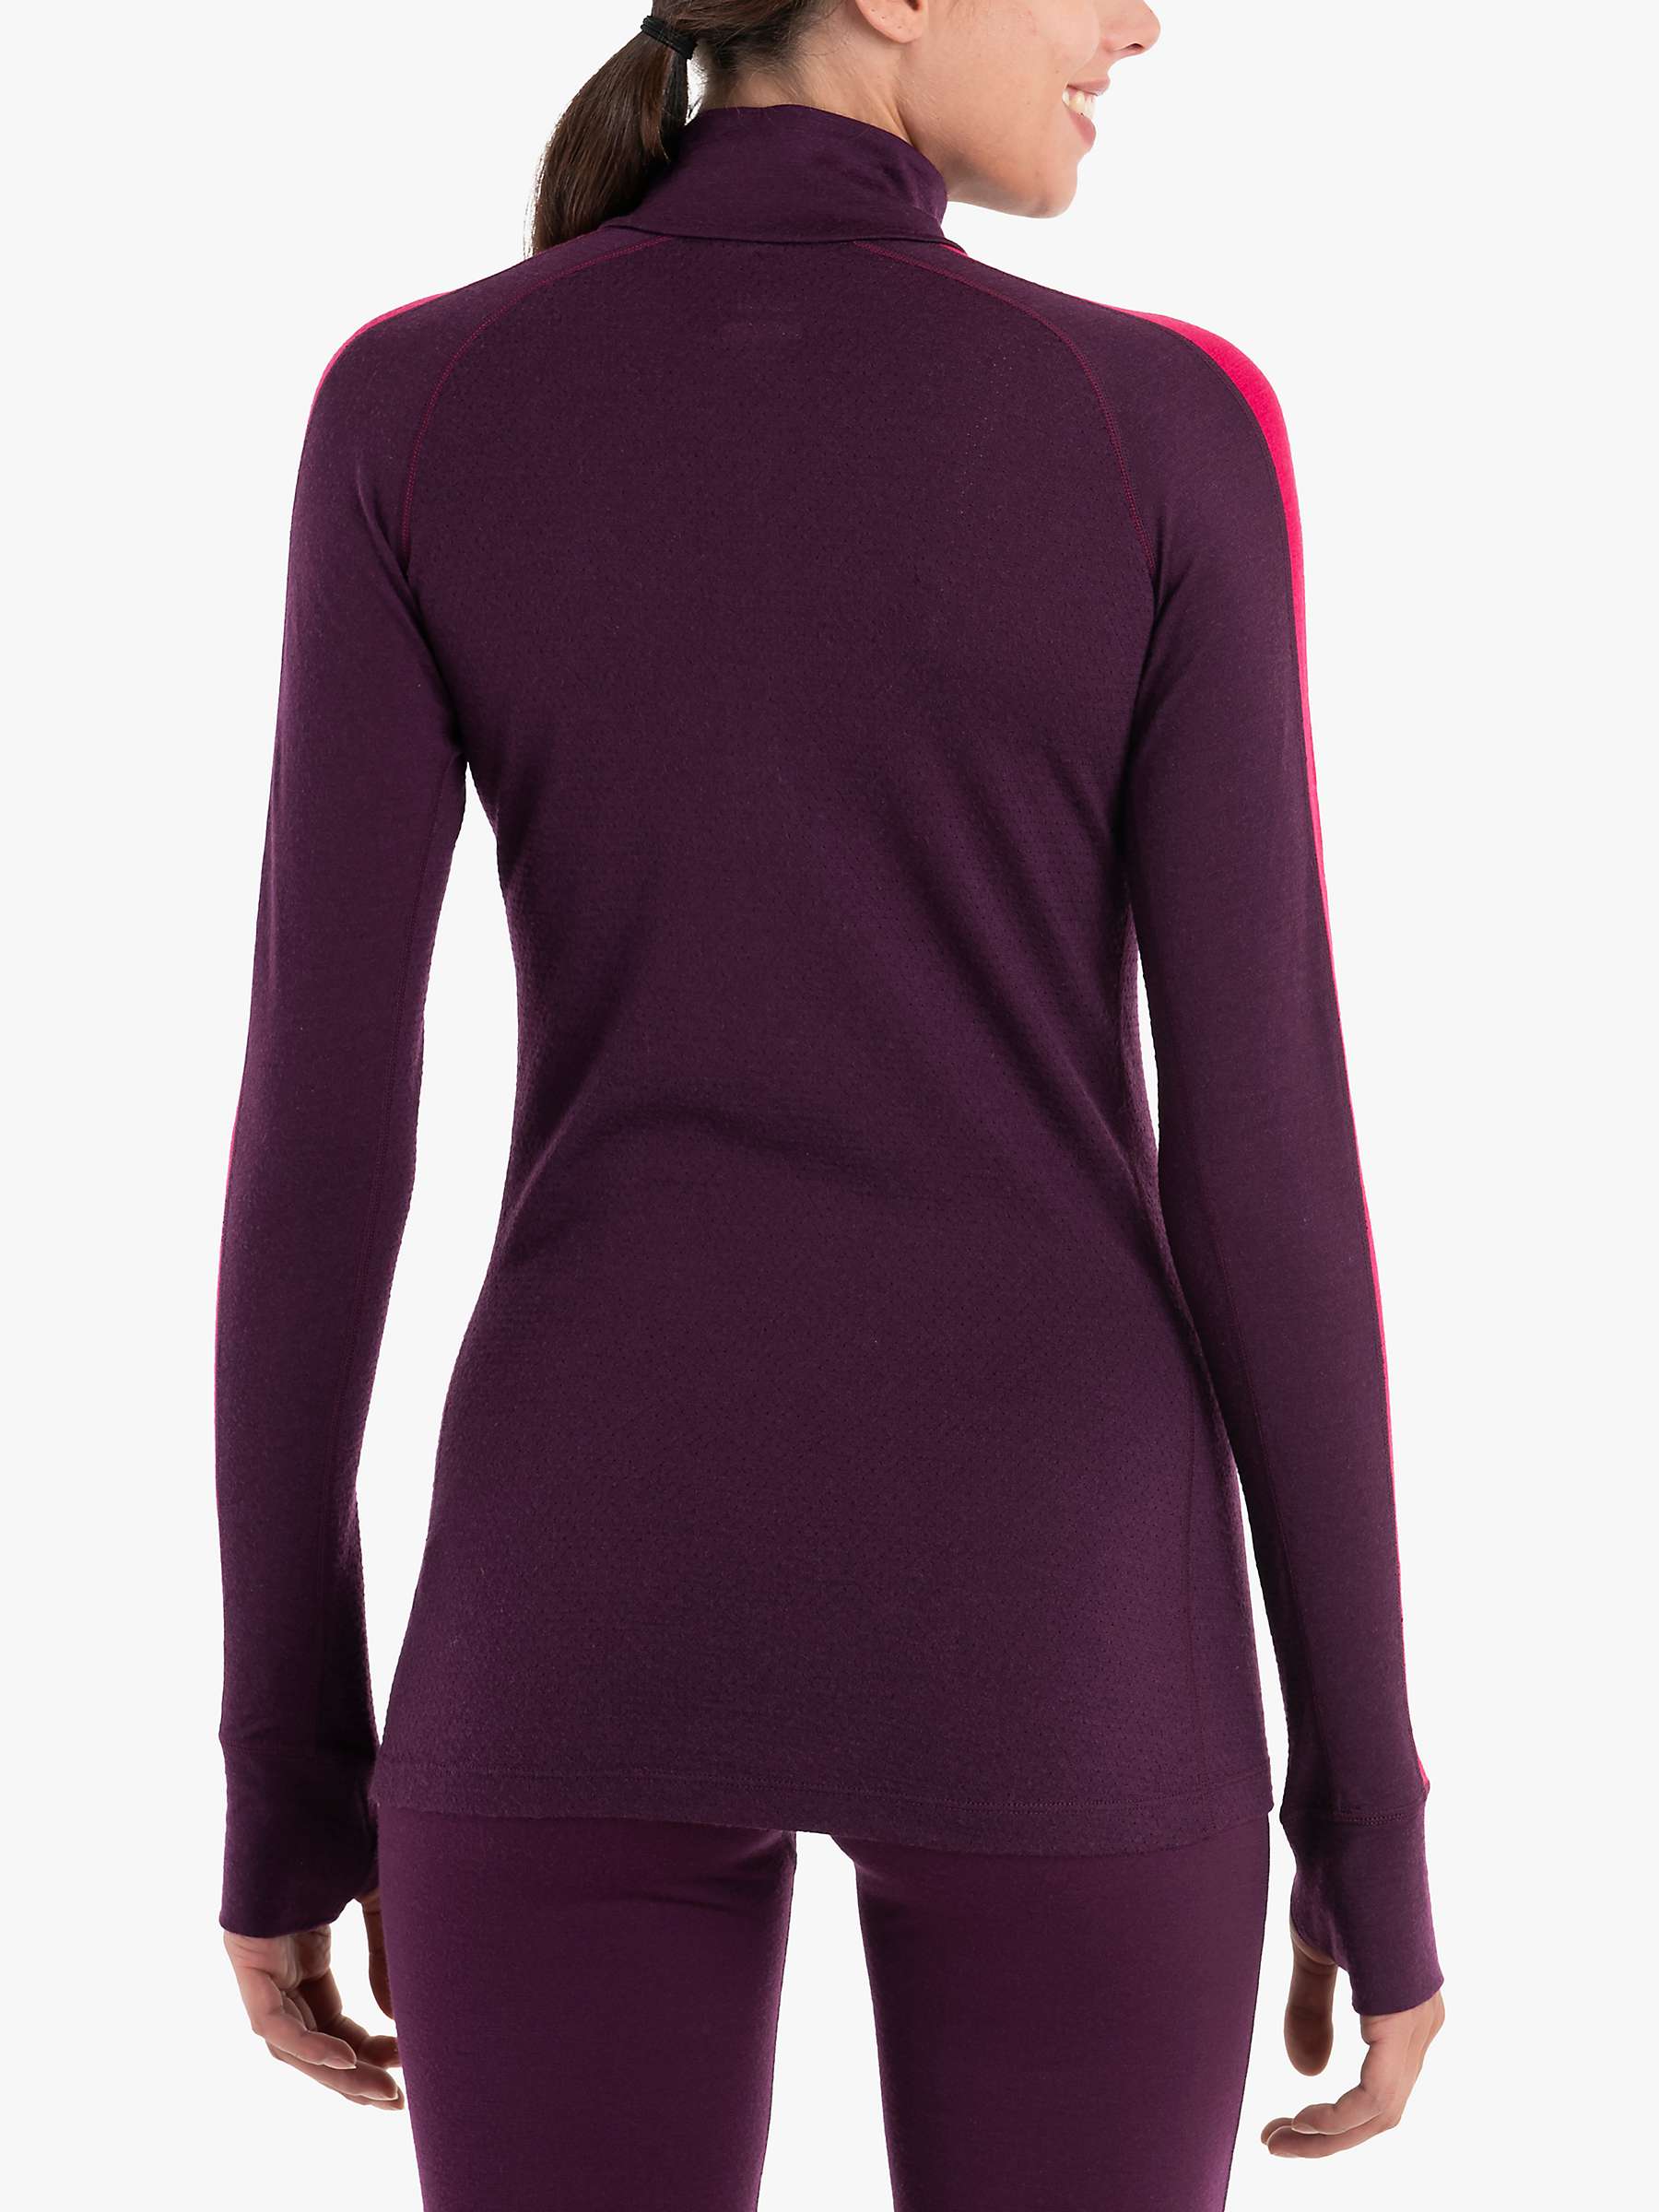 Buy Icebreaker Women's Merino Wool Base Layer Top, Electron/Pink Online at johnlewis.com